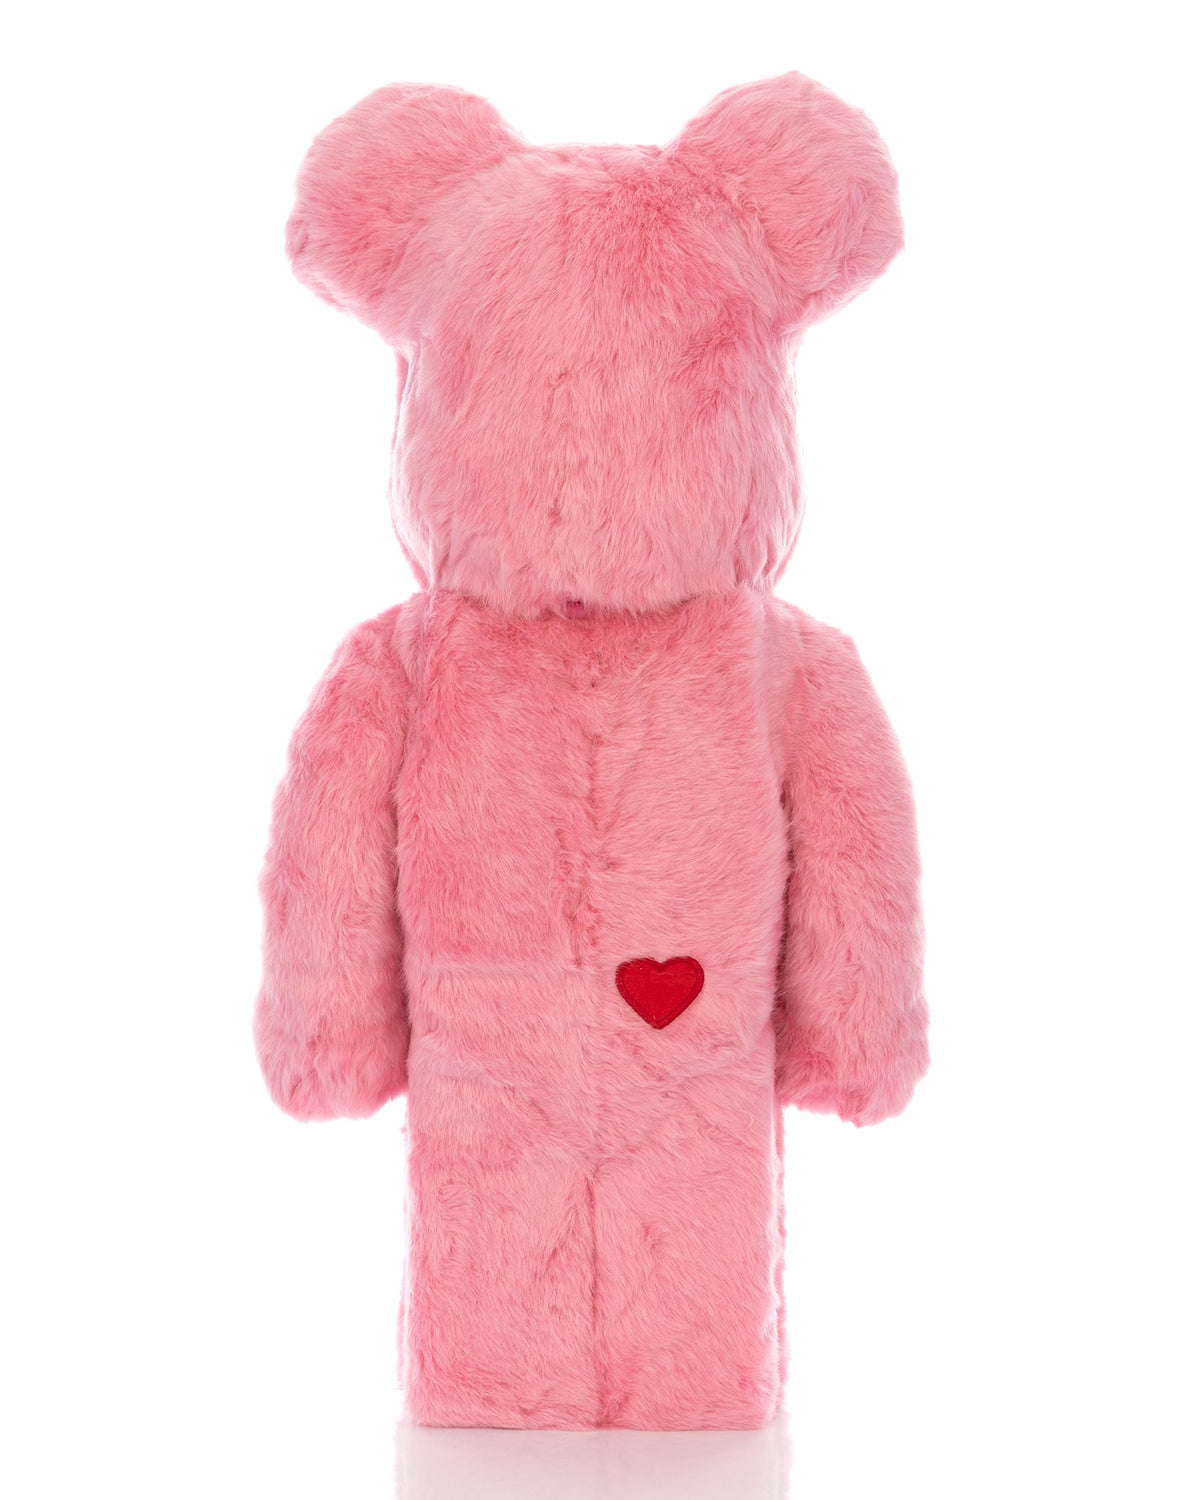 Medicom Toy | Be@rbrick Cheer Bear Costume vers. 1000% - Concrete